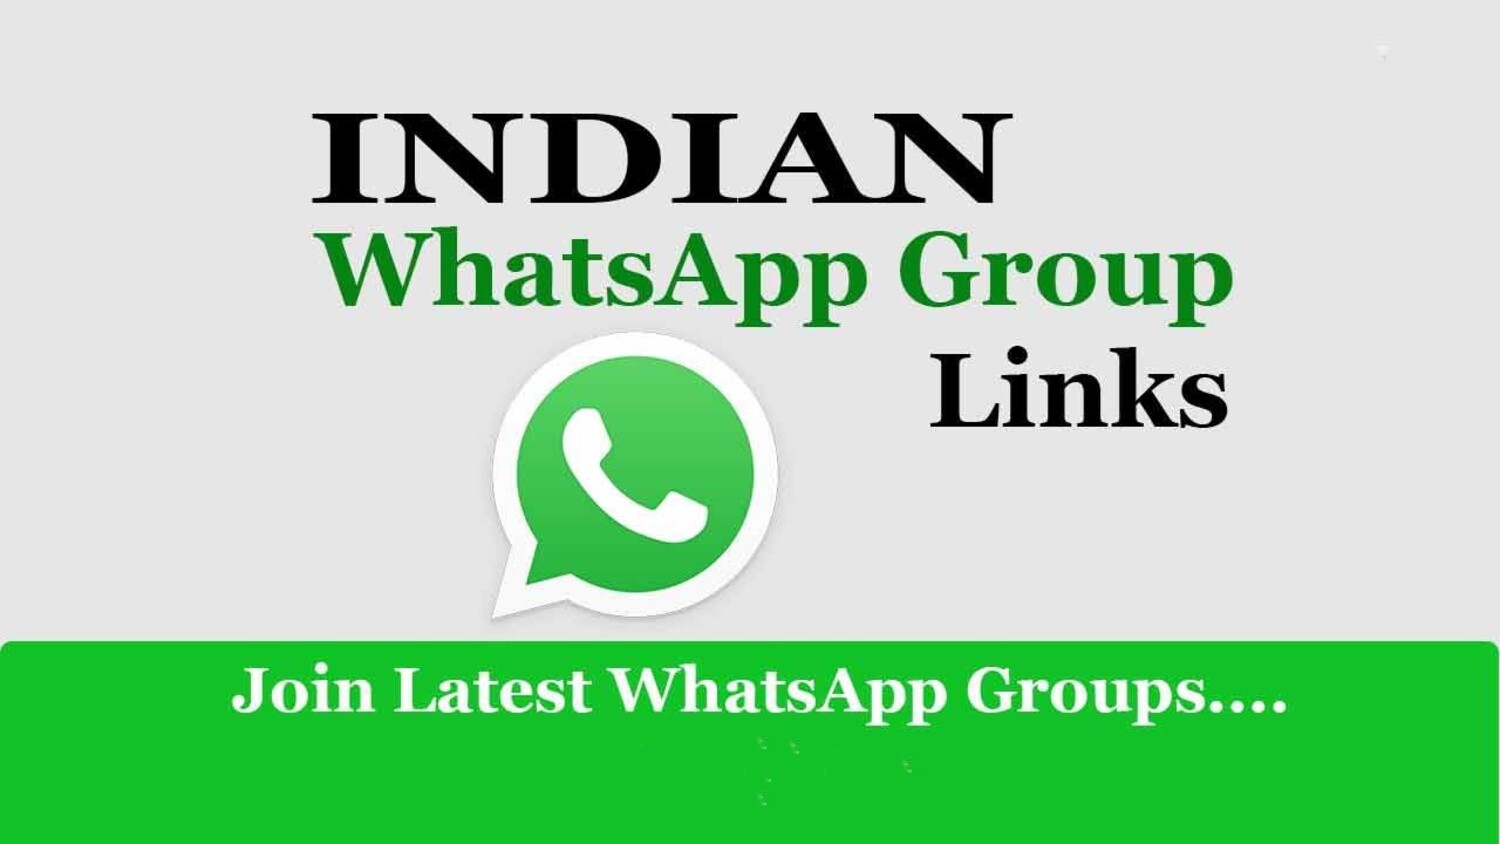 Indian WhatsApp Group Links